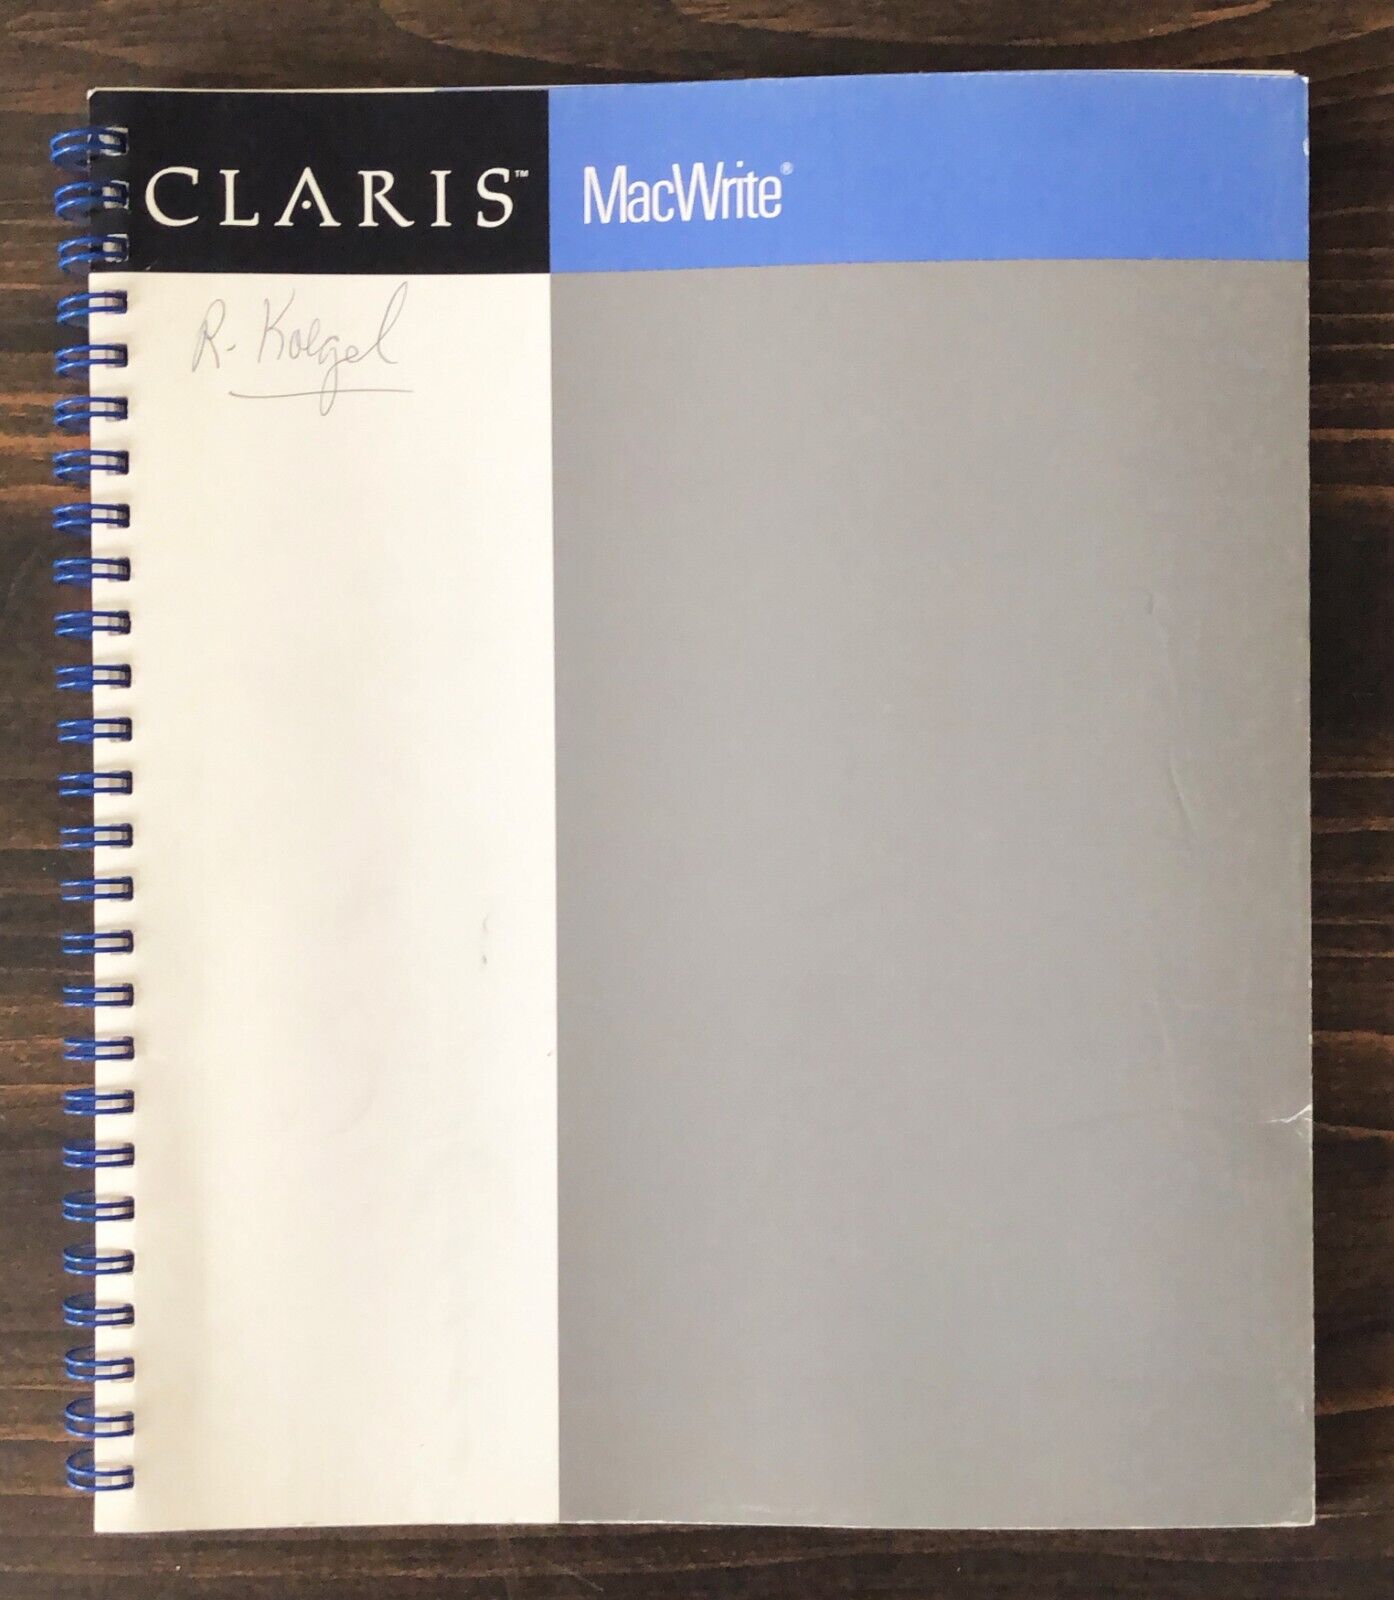 Claris - MacWrite (1988)